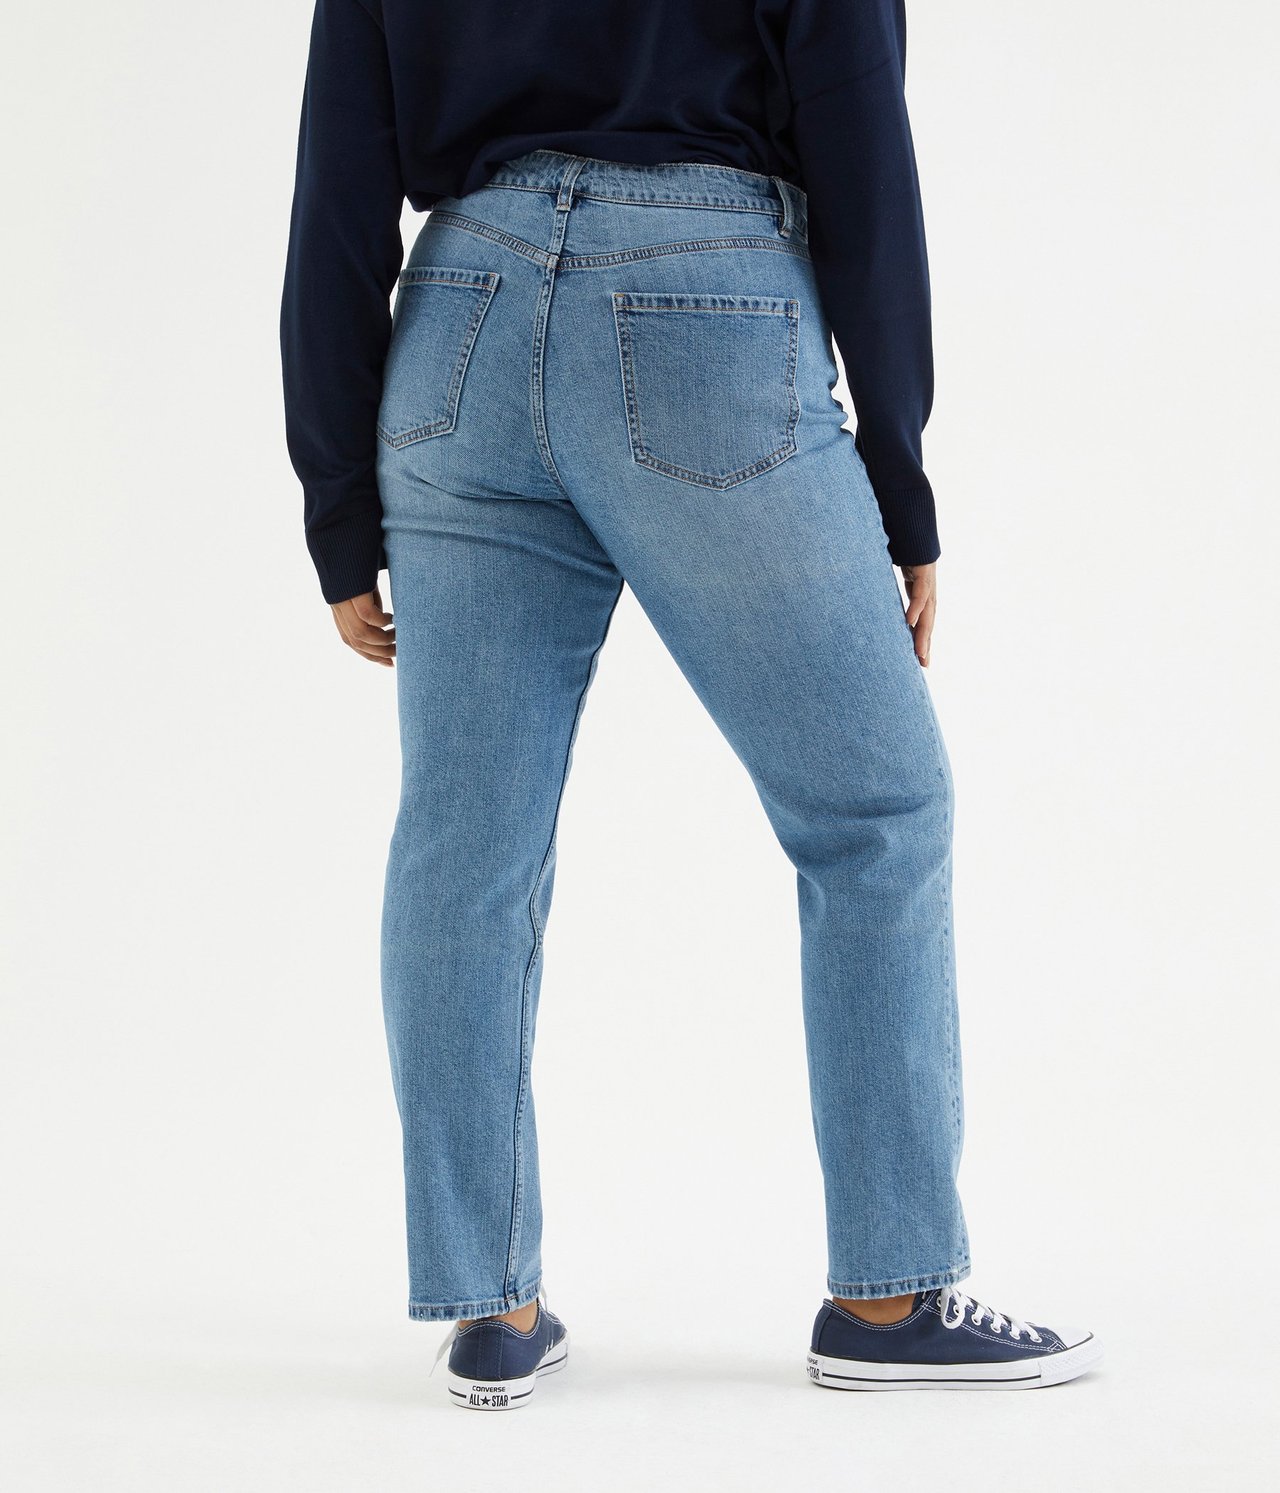 Jeans high waist tapered Lys denim - null - 7